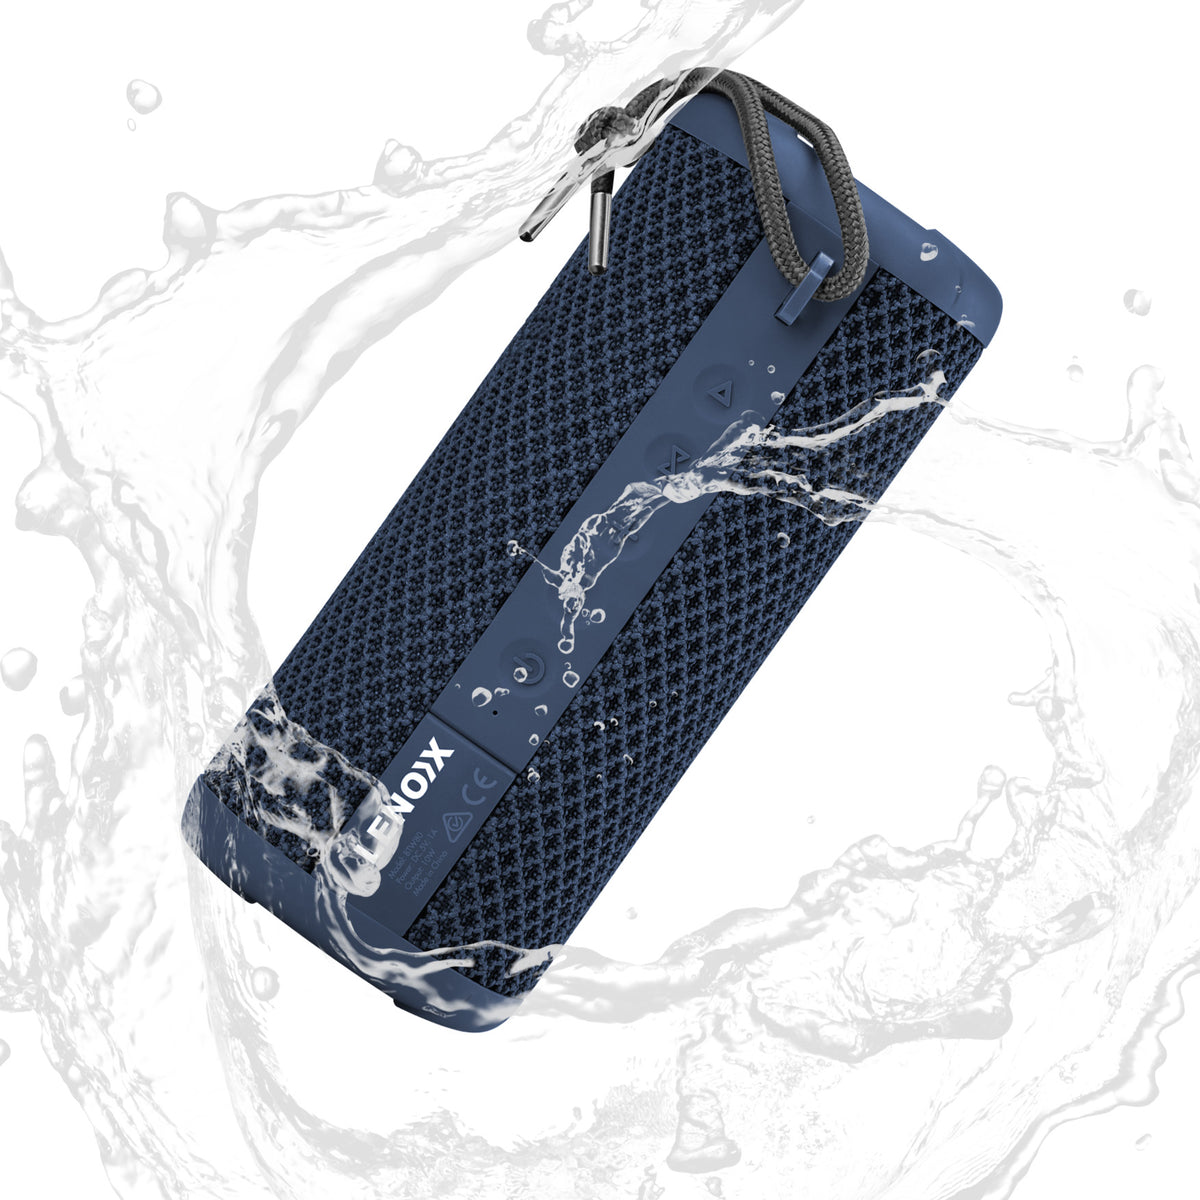 Blue waterproof portable bluetooth speaker.